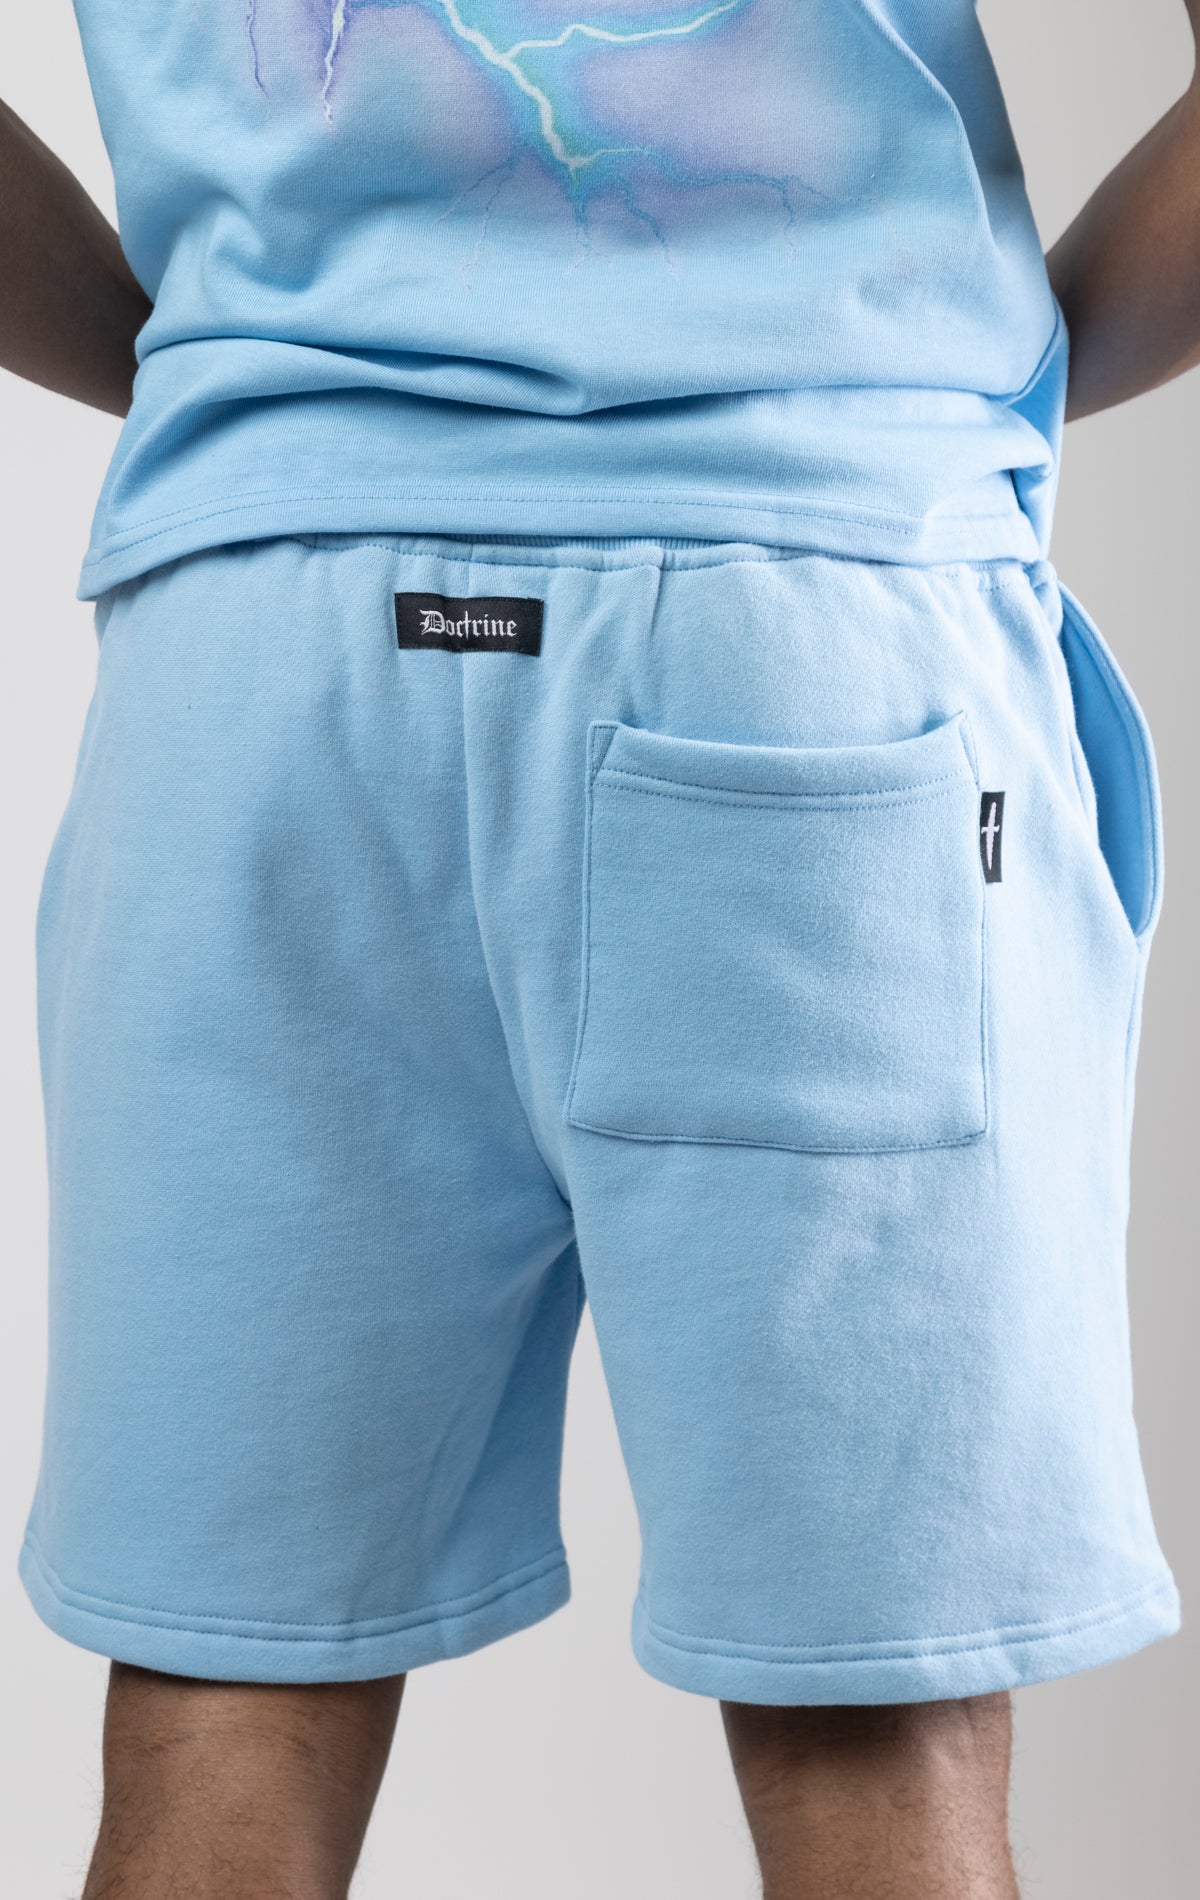 Sky blue fleece shorts with a digital lightning print running down the legs.